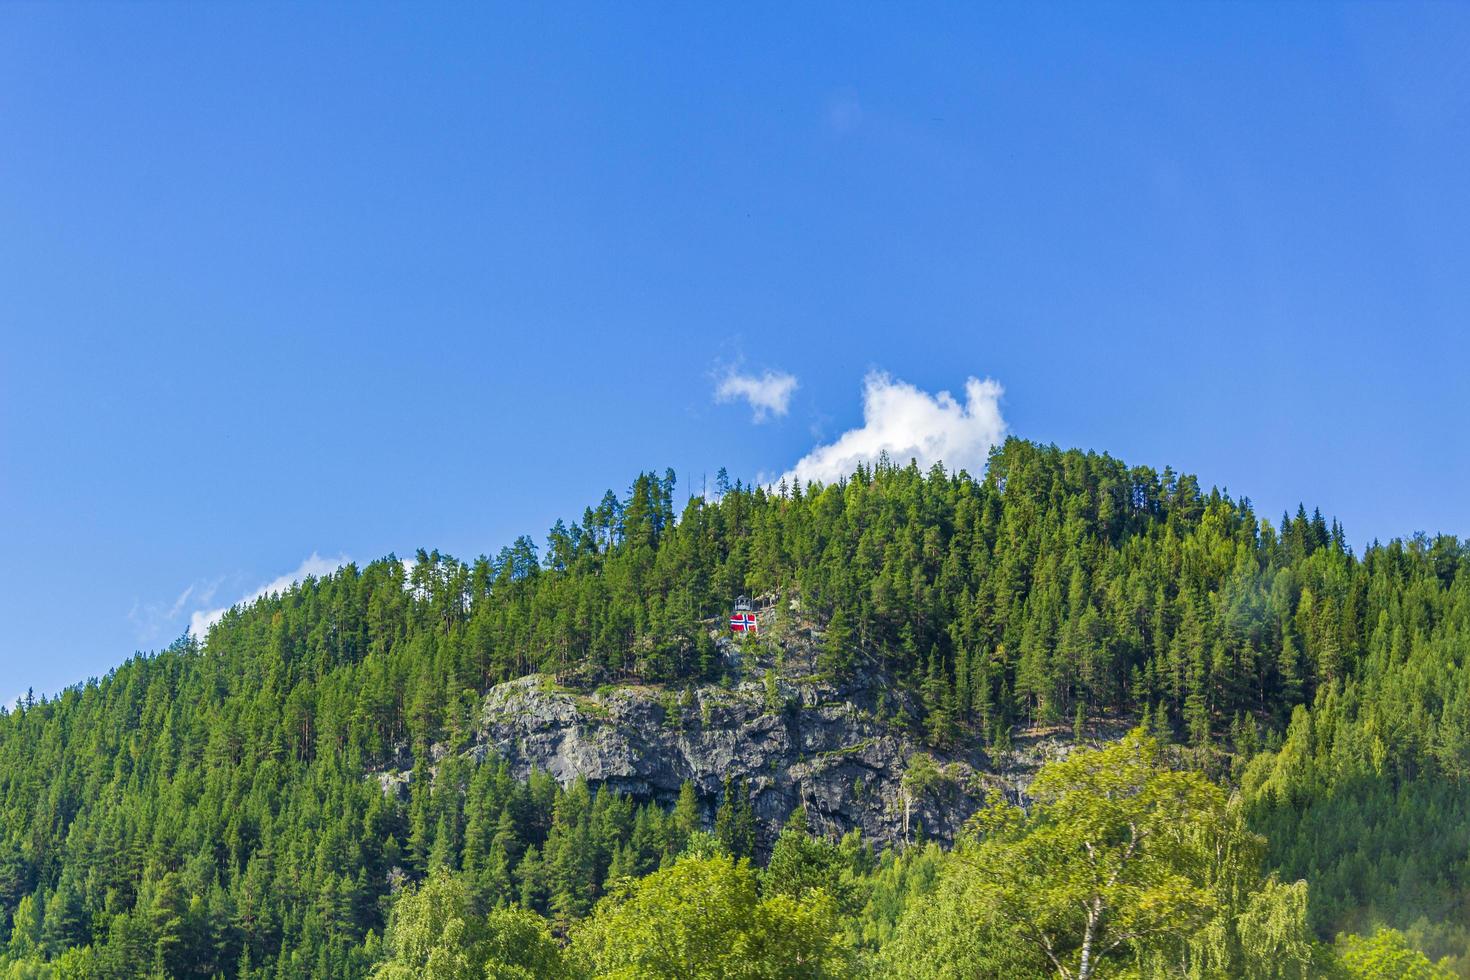 norsk flagga på en skogbevuxen kulle i byn foto